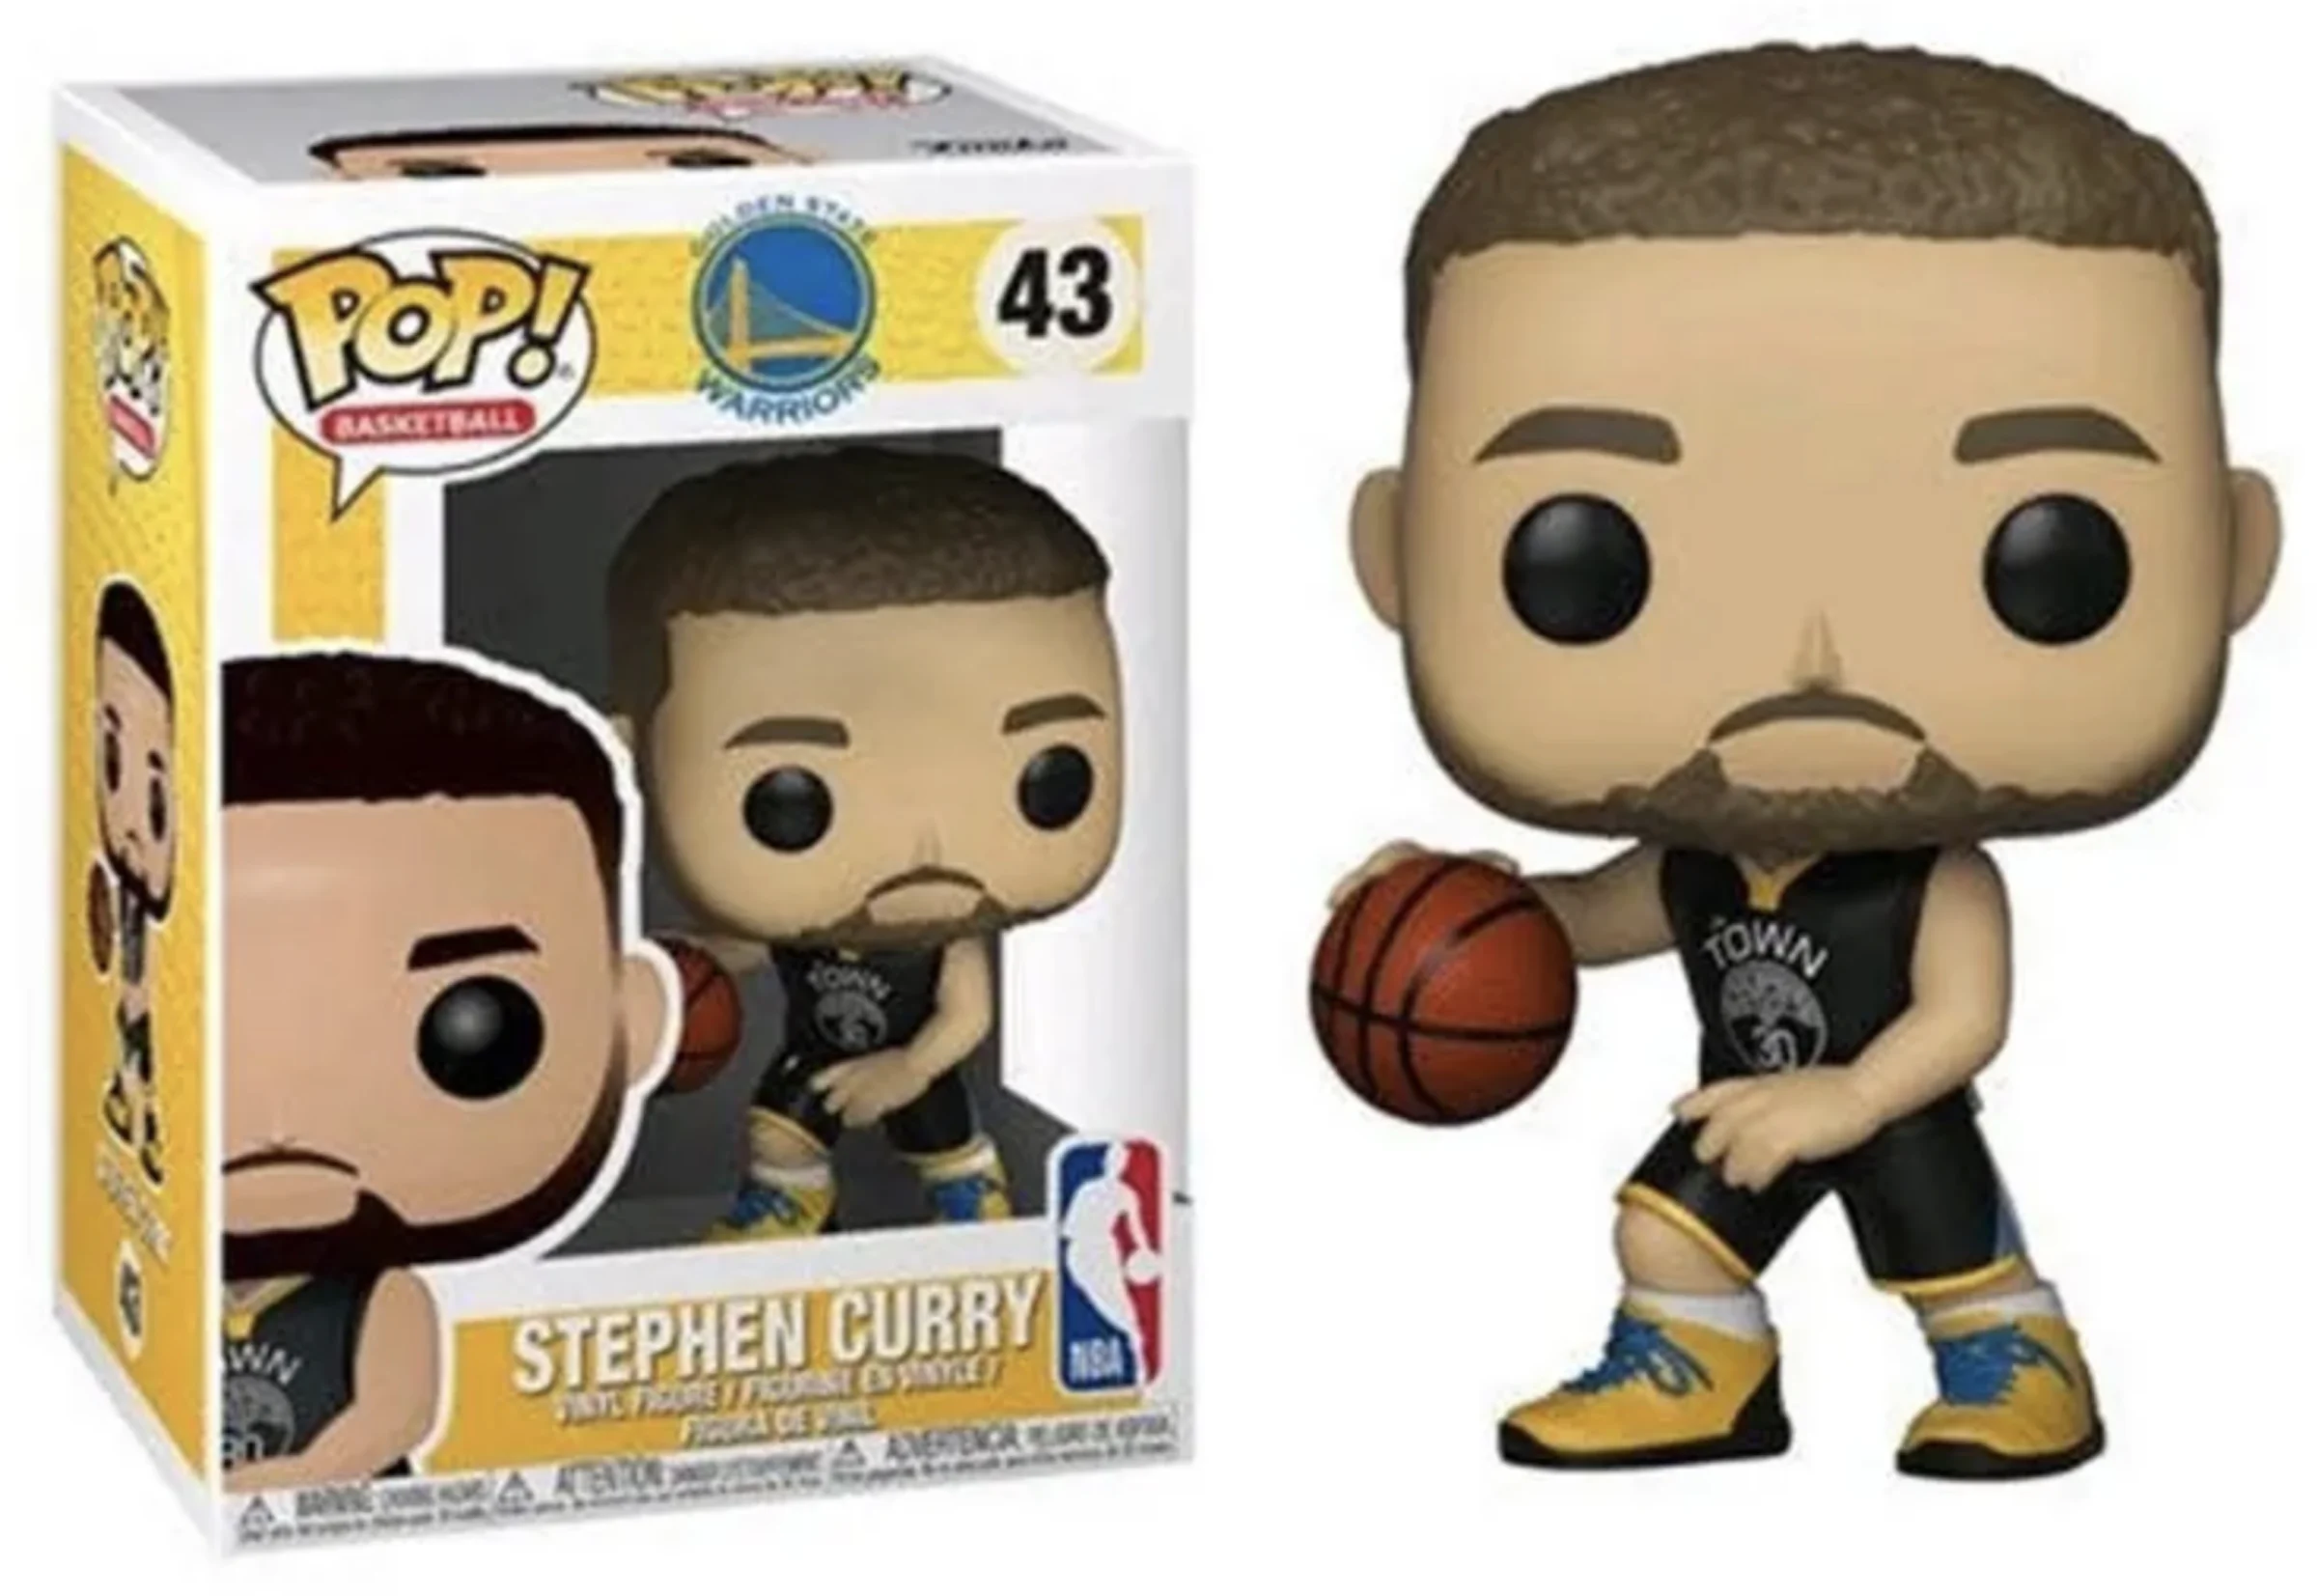 Funko Pop! Basketball NBA Stephen Curry Figure #43